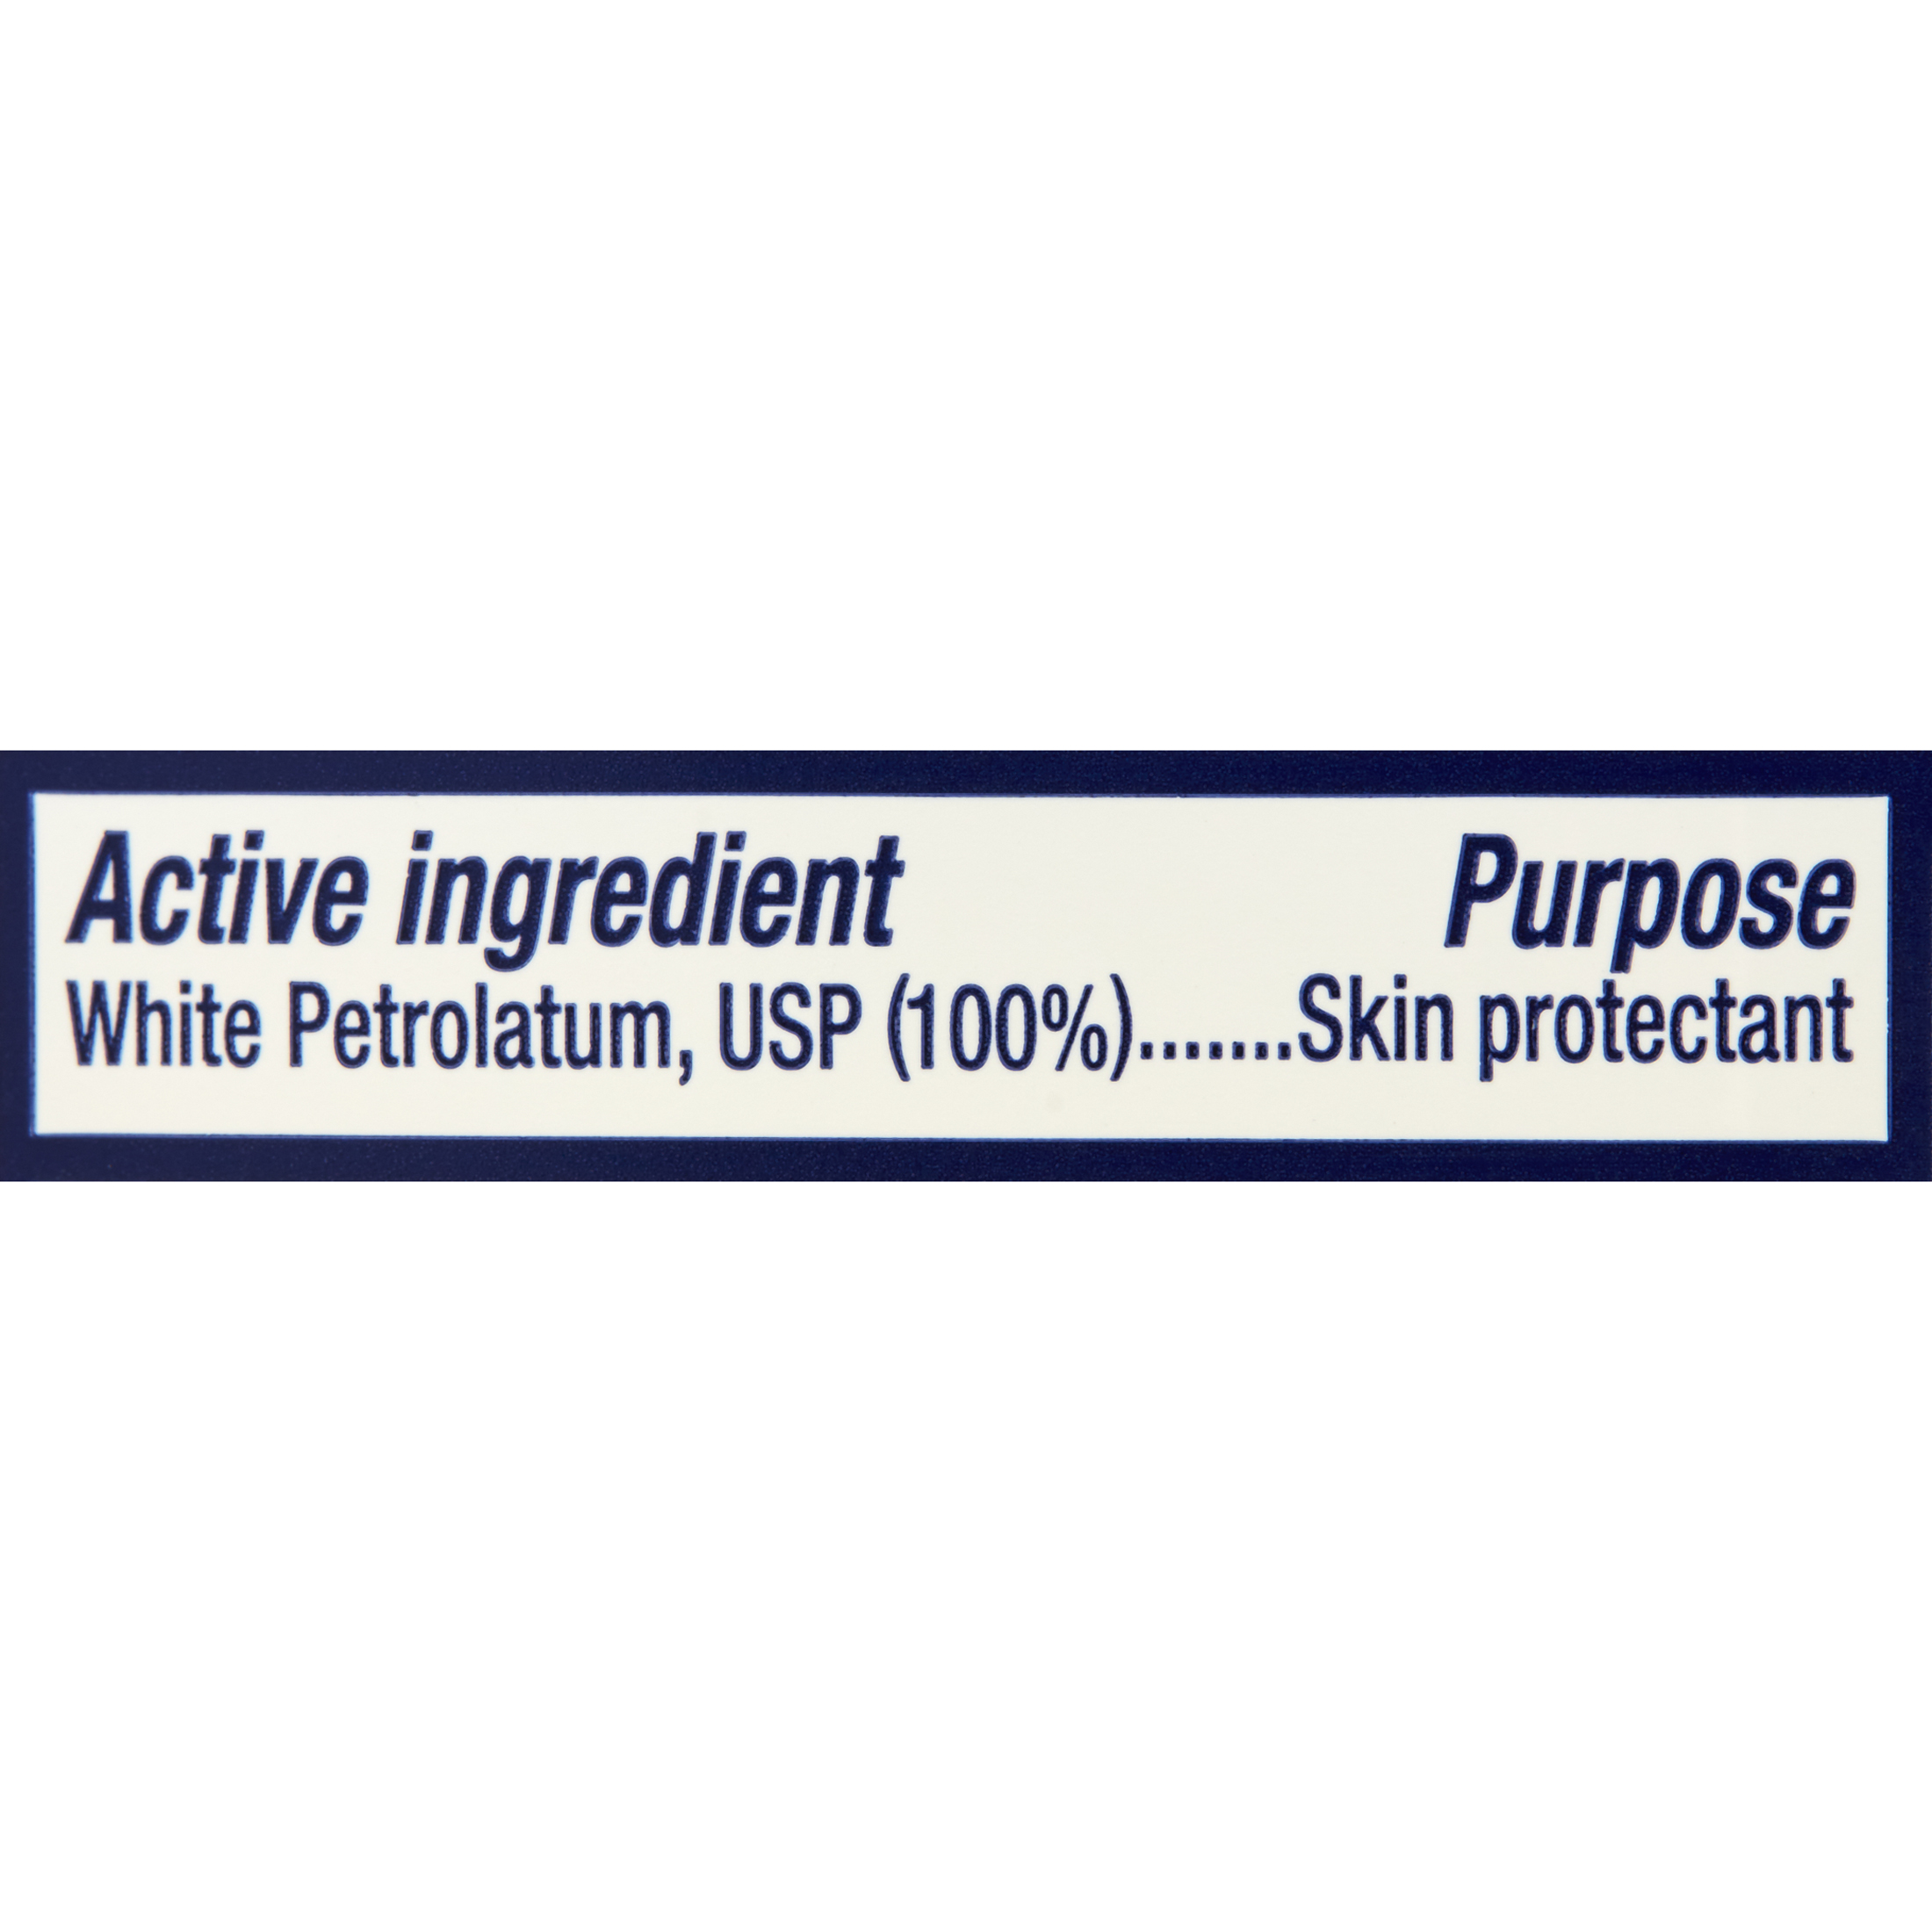 Vaseline Original Healing Moisturizing Petroleum Jelly for Dry Skin, 13 oz (2 Count) - image 6 of 7